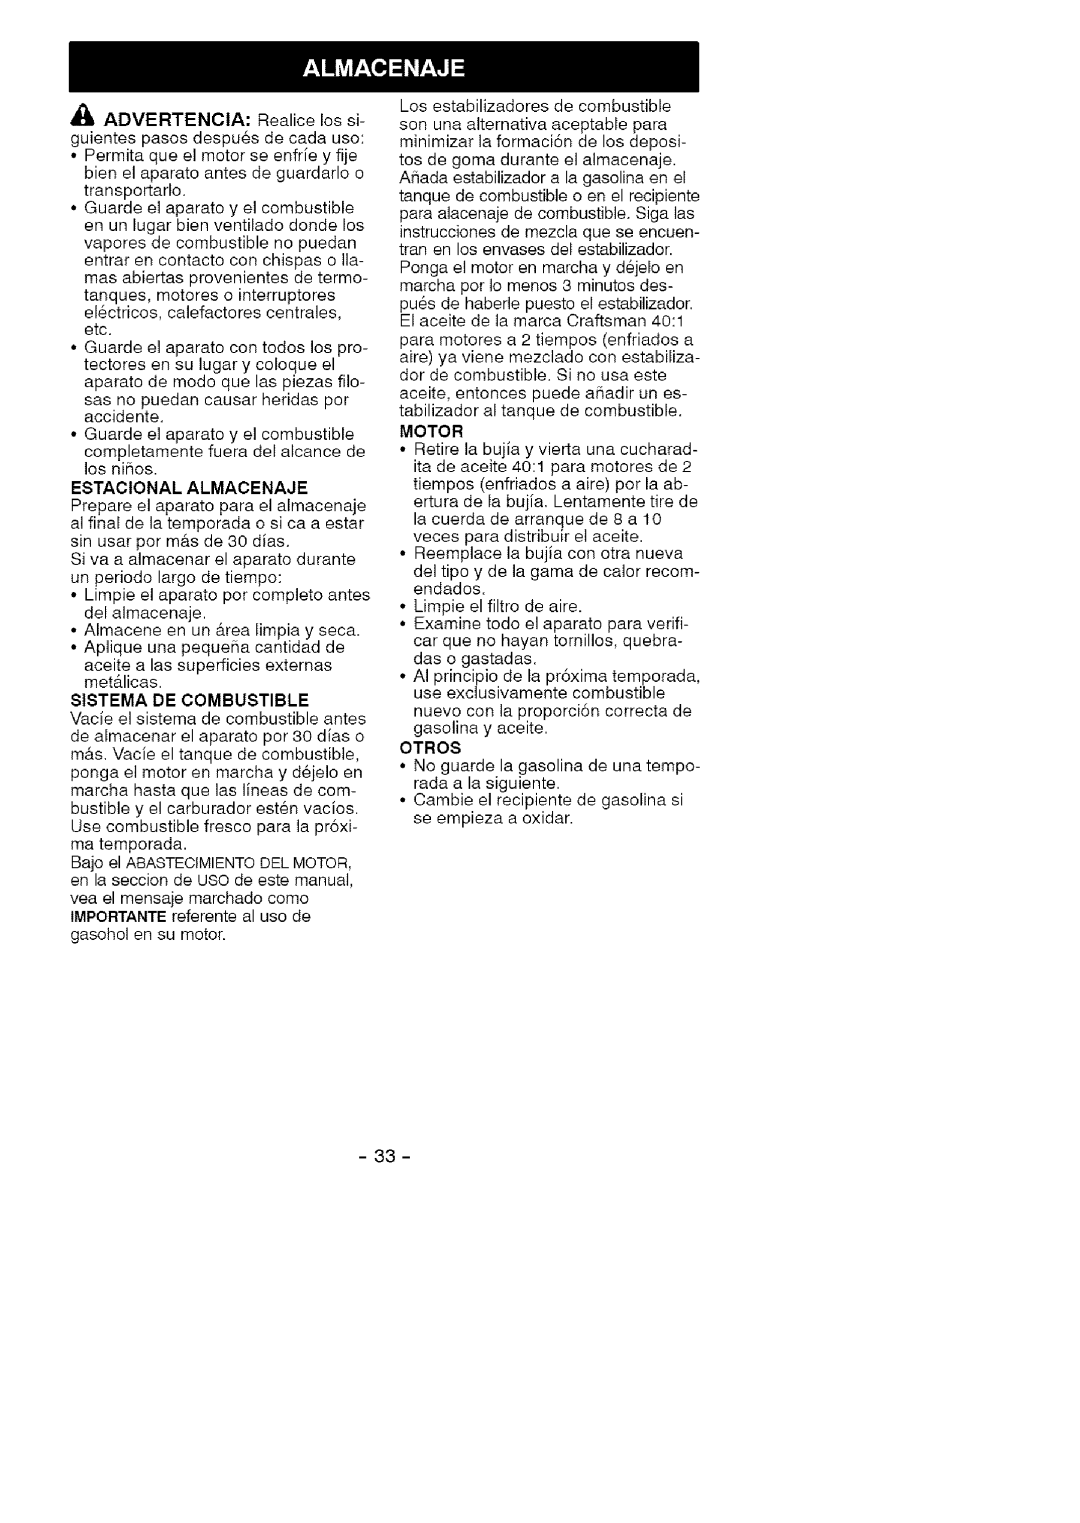 Craftsman 358.79474 manual Estacional Almacenaje, Sistema De Combustible, Motor 